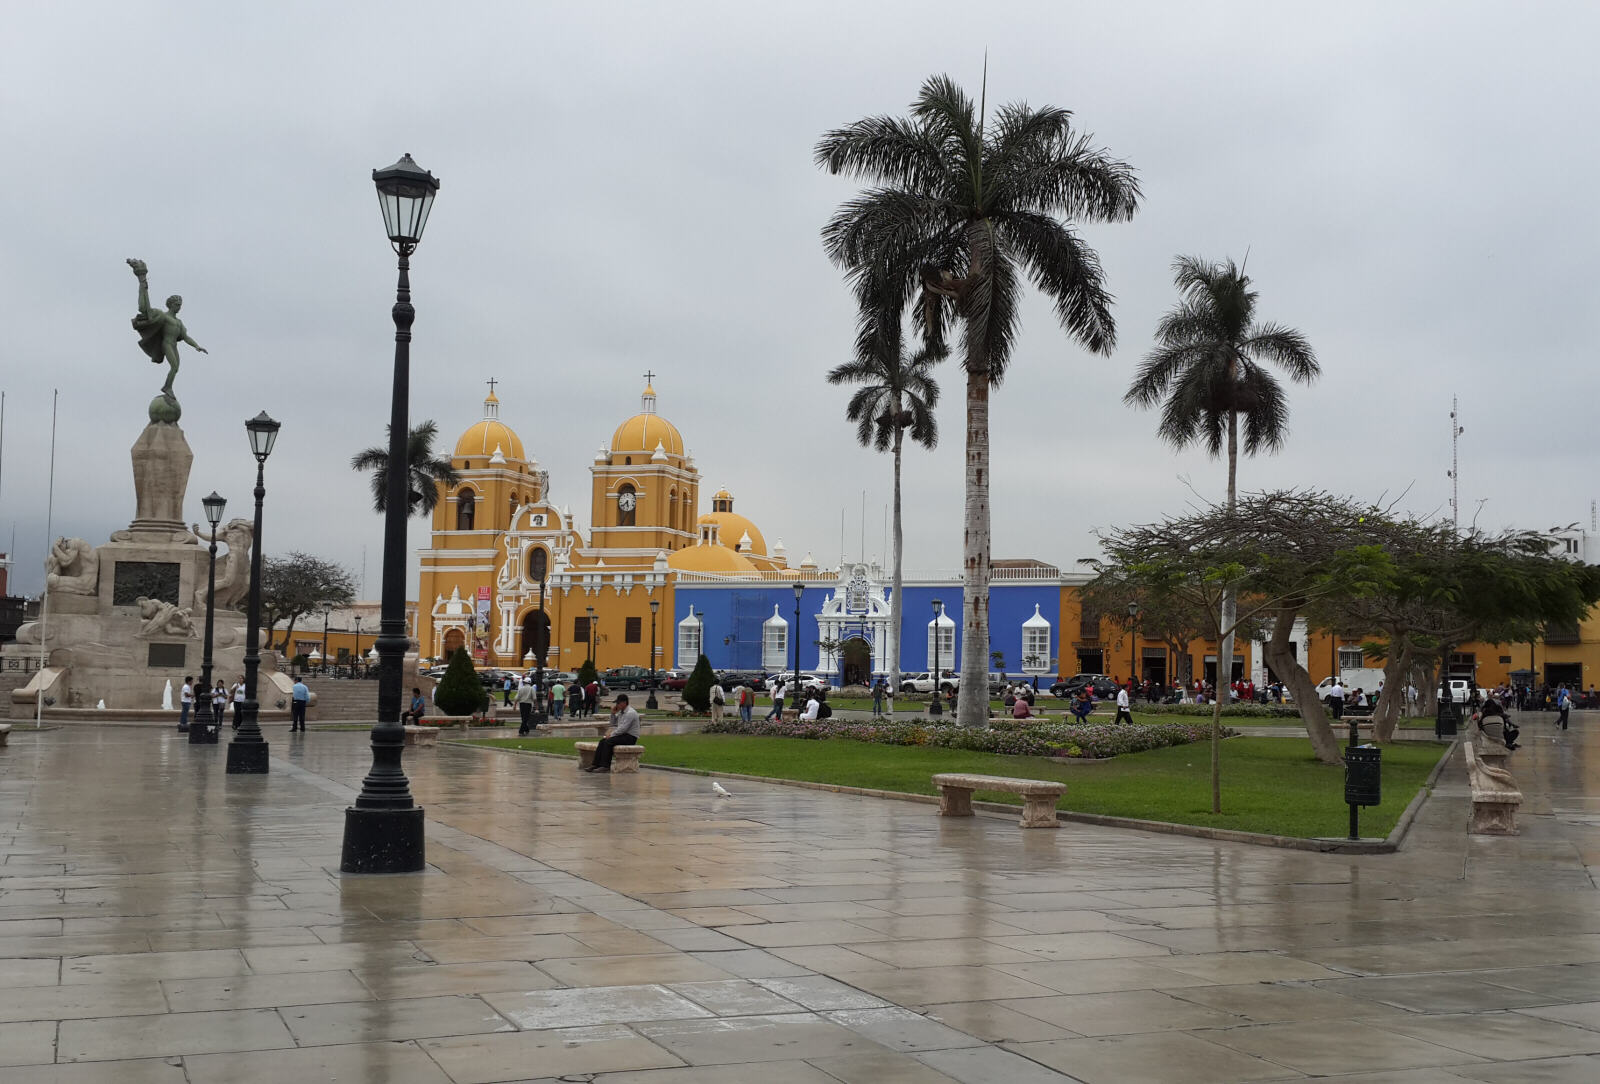 Plaza de Armas in Trujillo, Peru